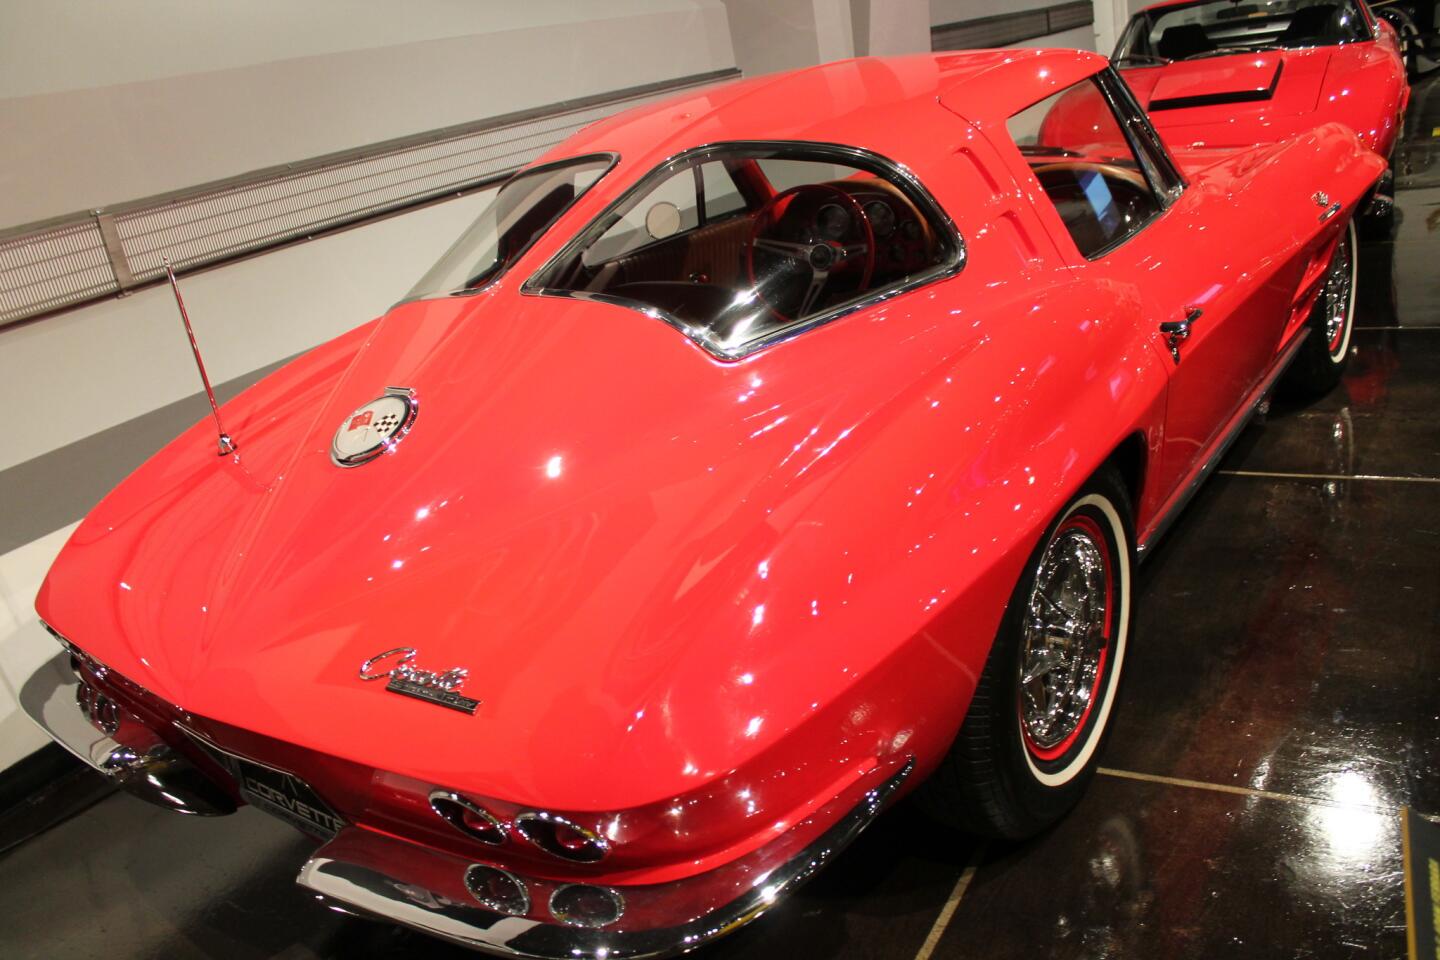 1963 Chevrolet Corvette Stingray chosen by Top Gear USA hosts Tanner Foust, Adam Ferrara and Rutledge Wood